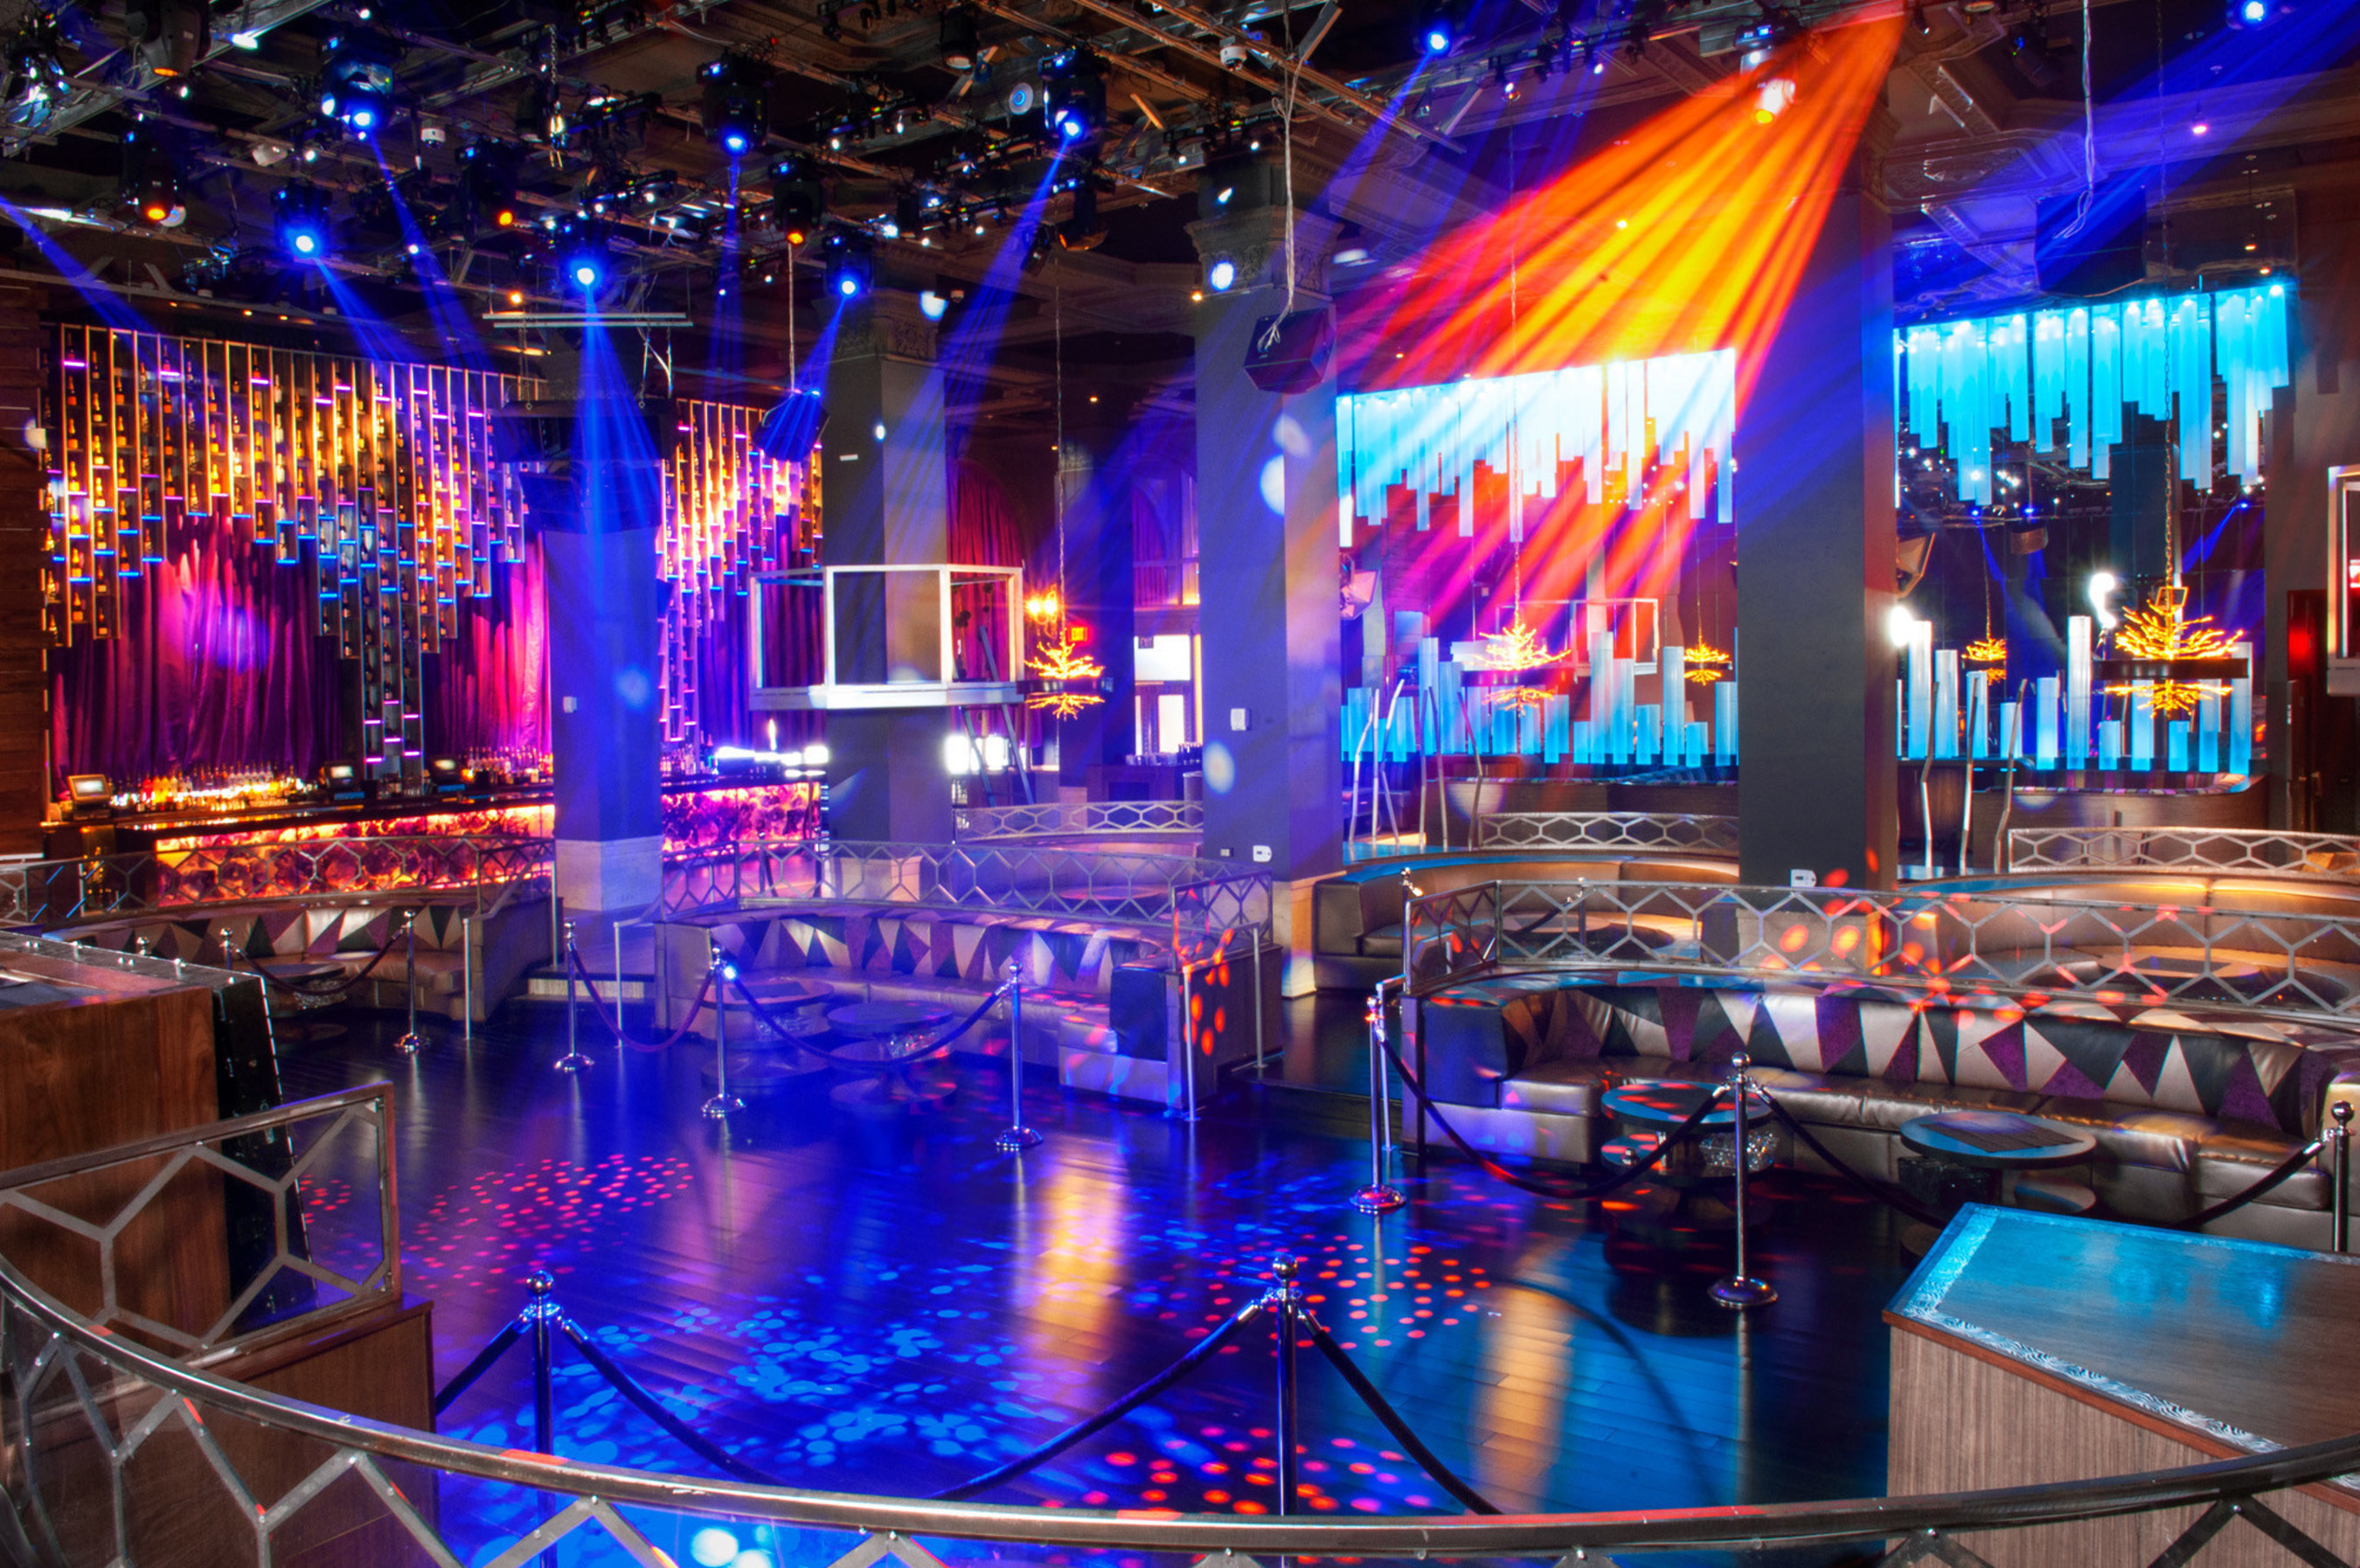 Parq Nightclub brings a slice of Vegas to San Diego with its custom LED lighting design and celebrity entertainment including DJ Steve Aoki, Skylar Grey, Jason Derulo, Chris Brown, MakJ, Ne-Yo, and many more.